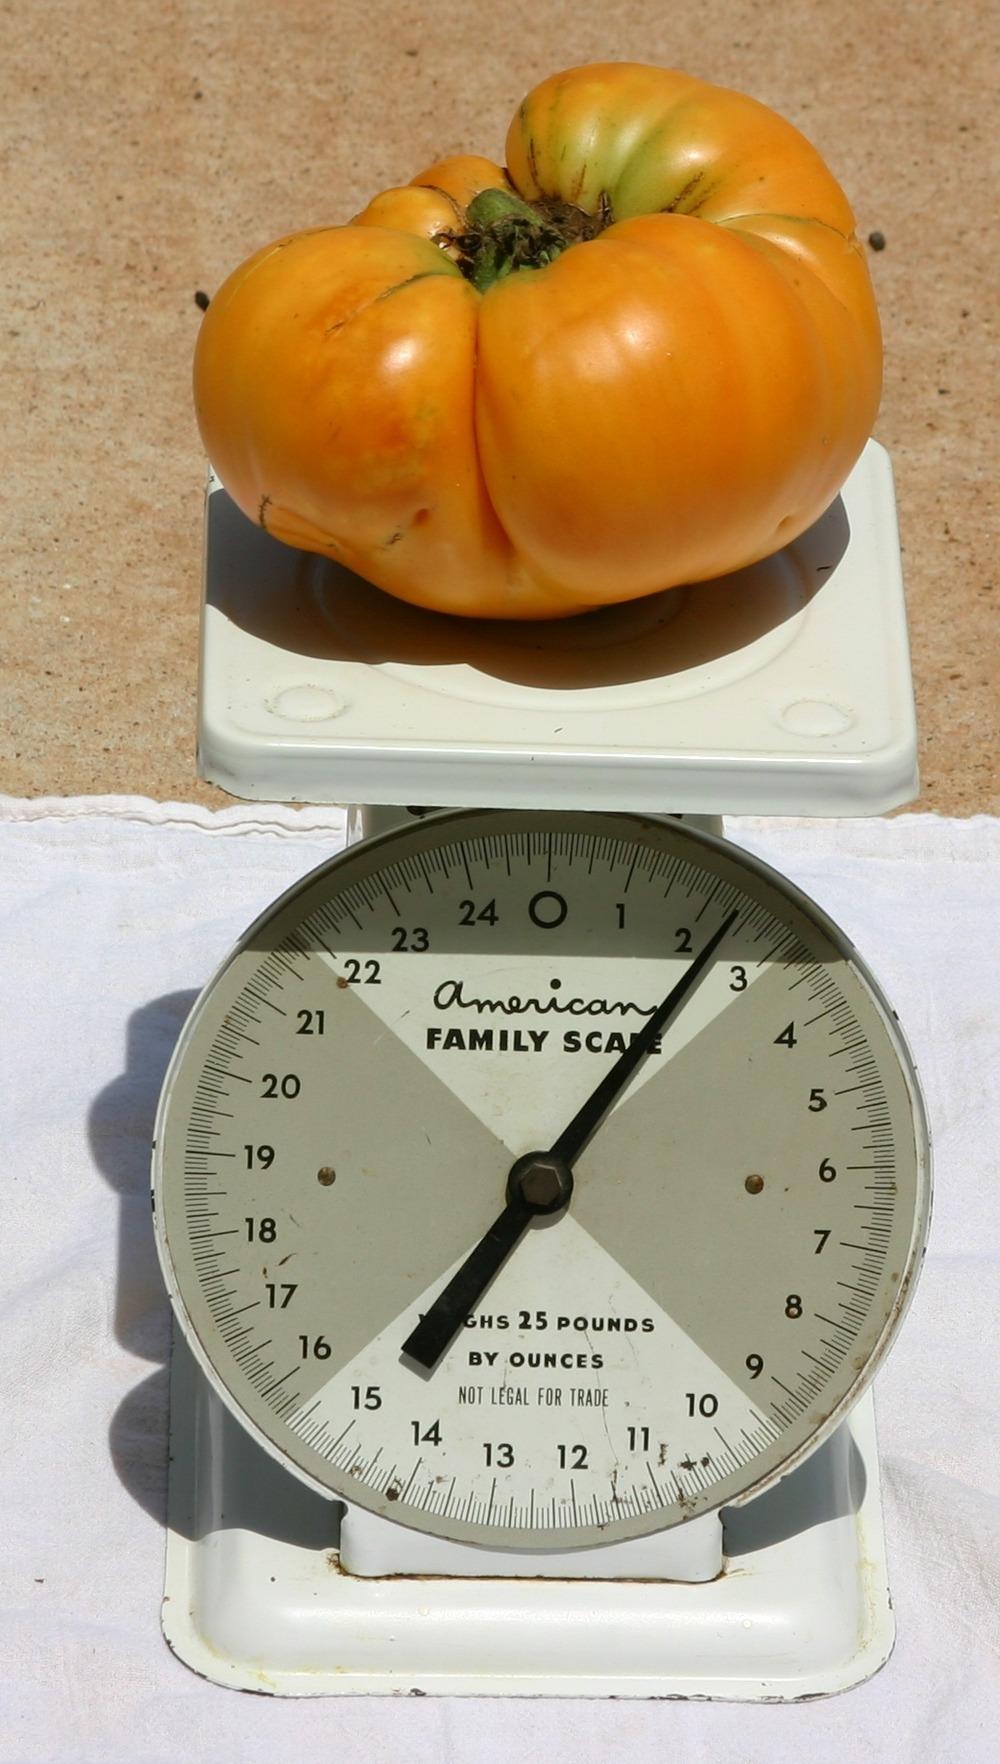 Photo of Tomato (Solanum lycopersicum 'Kellogg's Breakfast') uploaded by dave